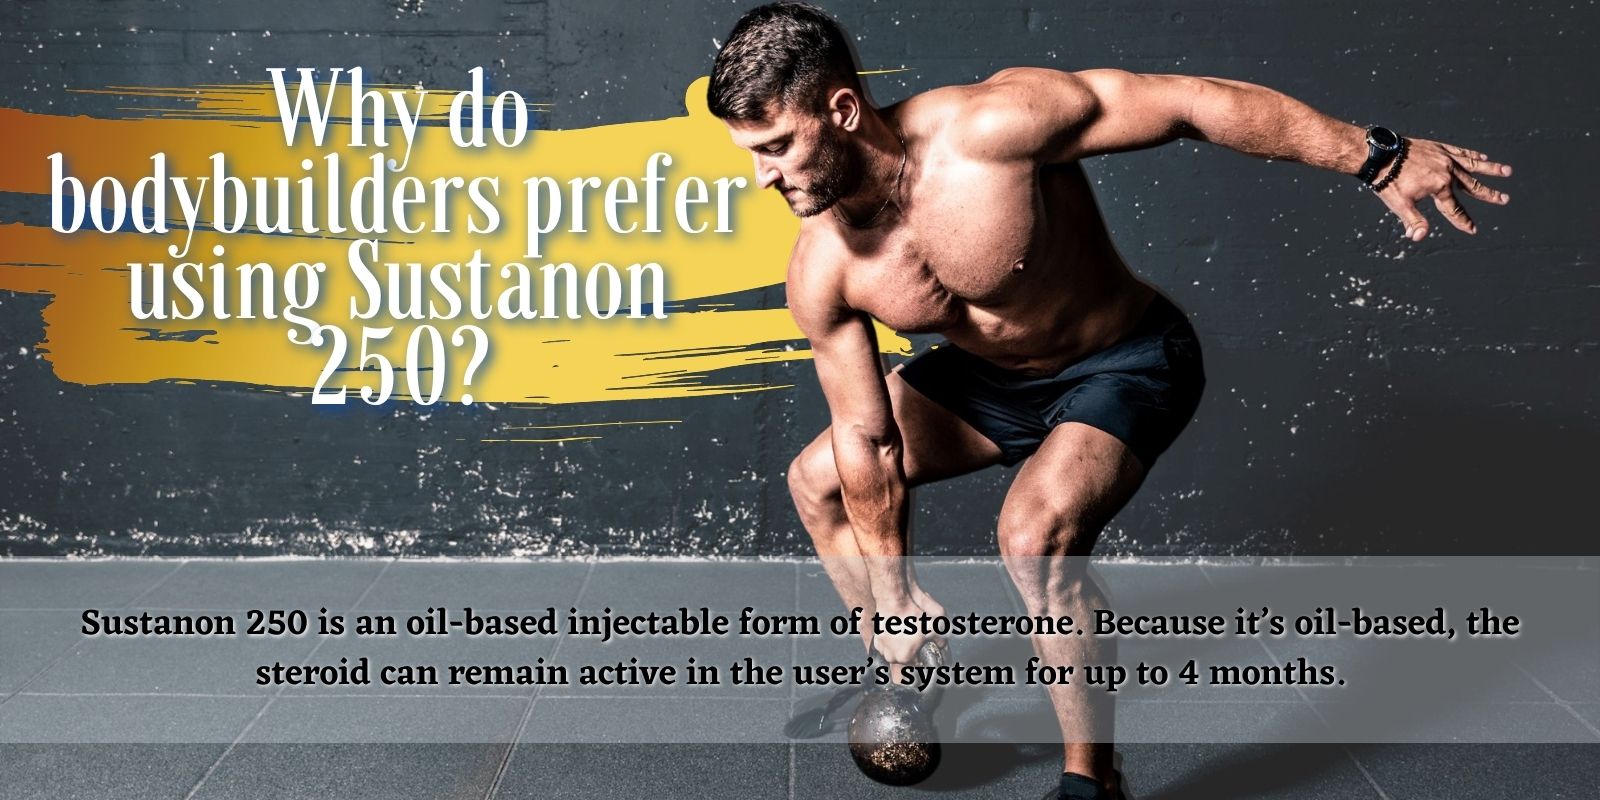 Why do bodybuilders prefer using Sustanon 250?